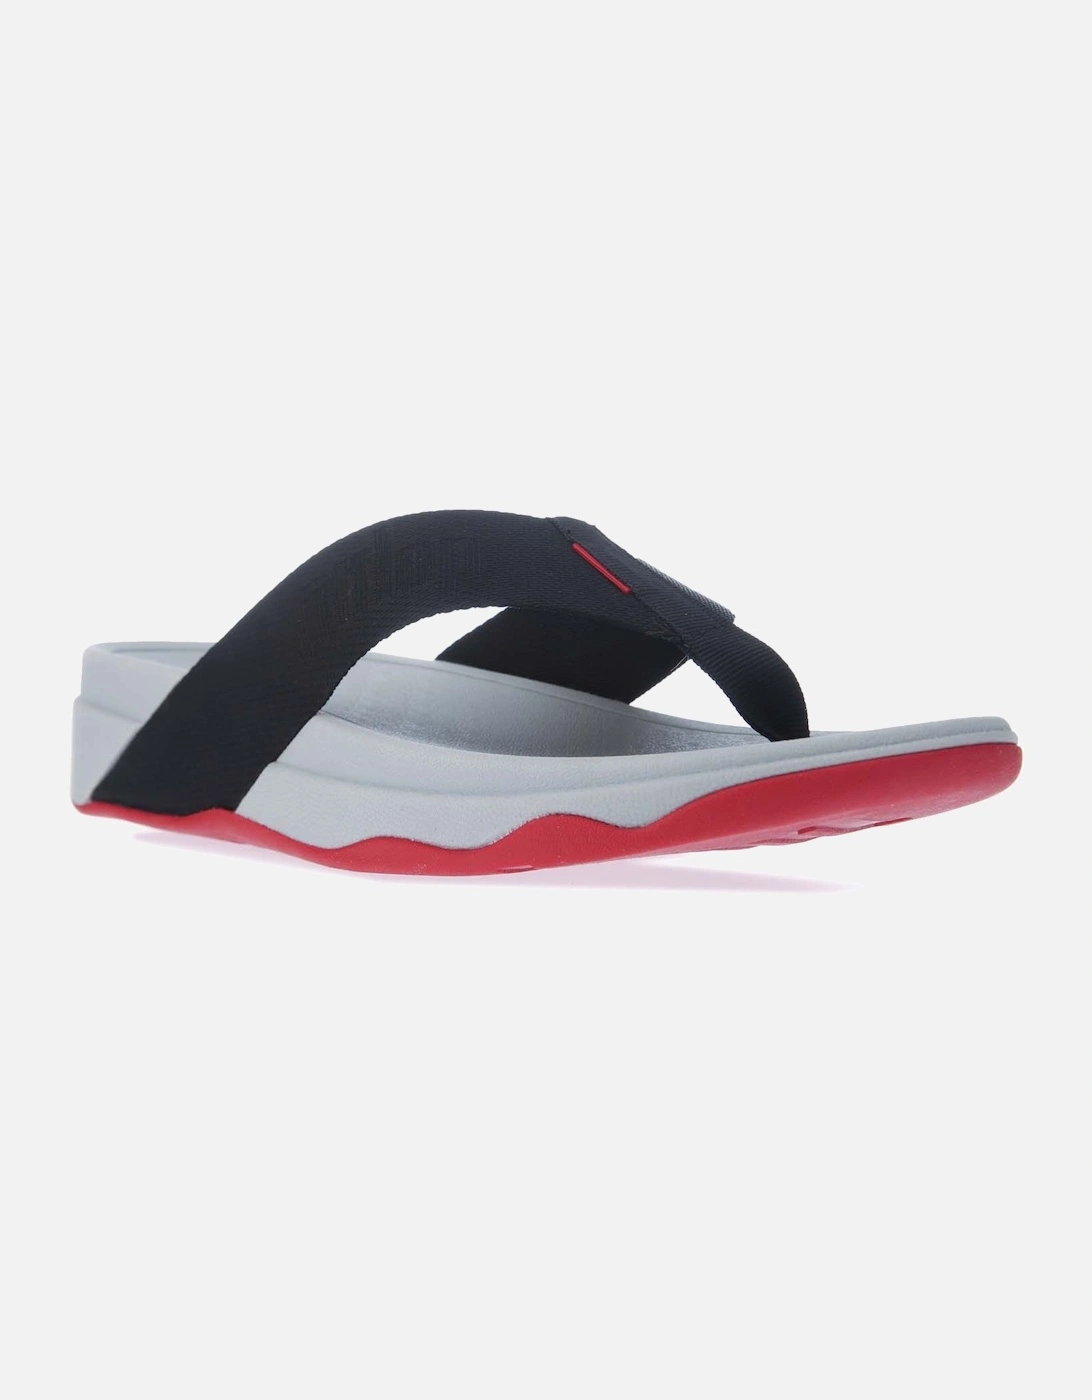 Womens Surfa Toe-Post Sandals